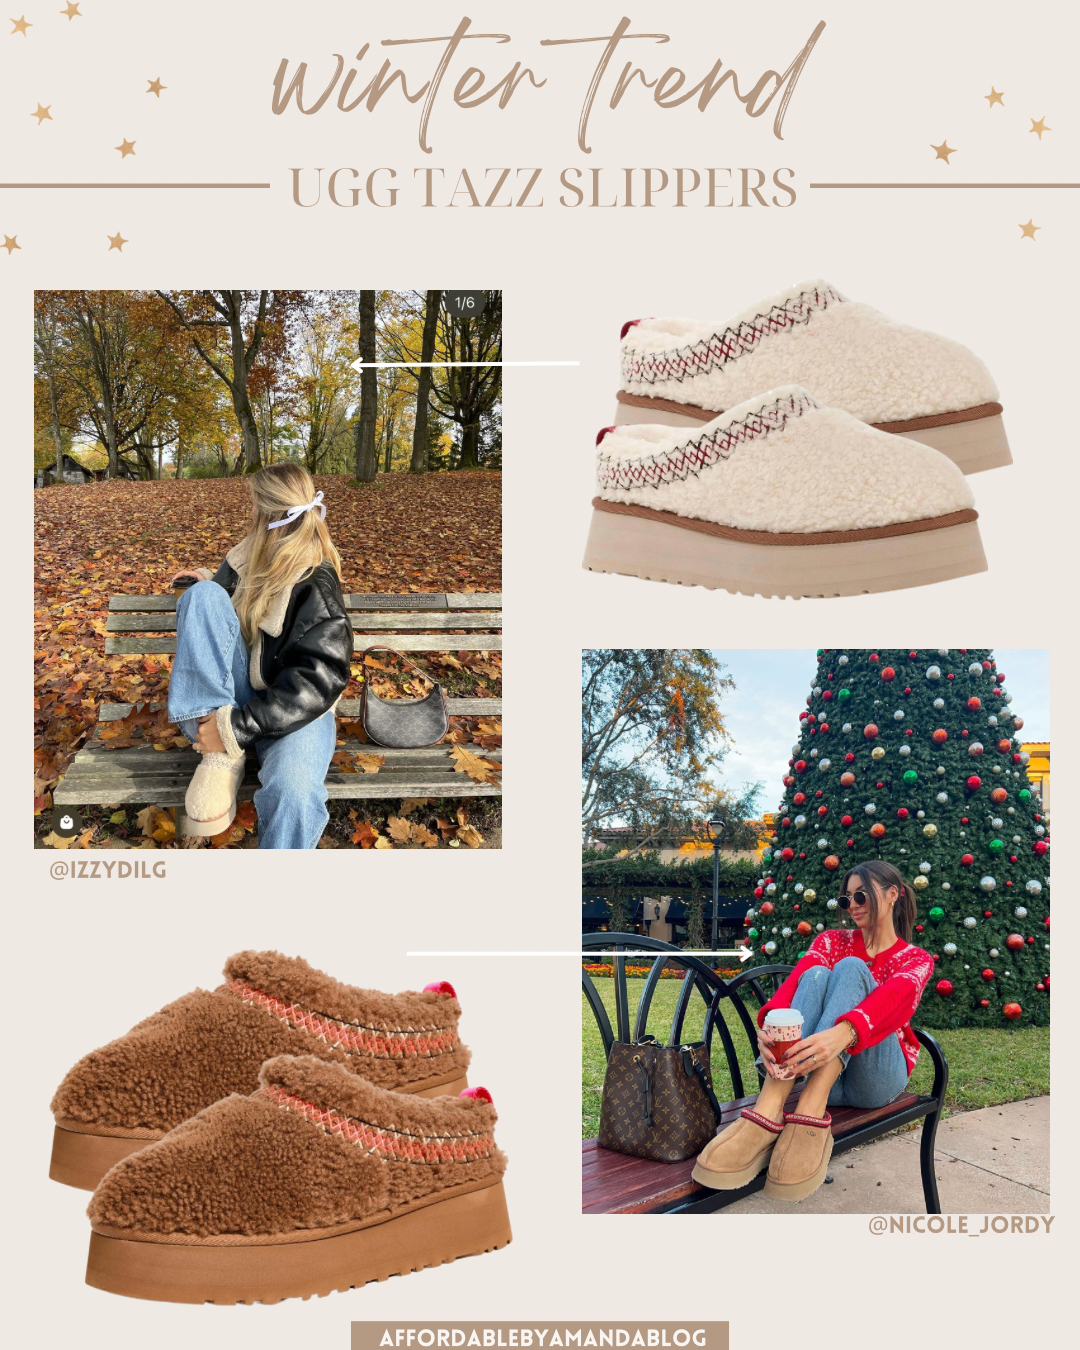 UGG Tasman Slippers Style - Affordable by Amanda